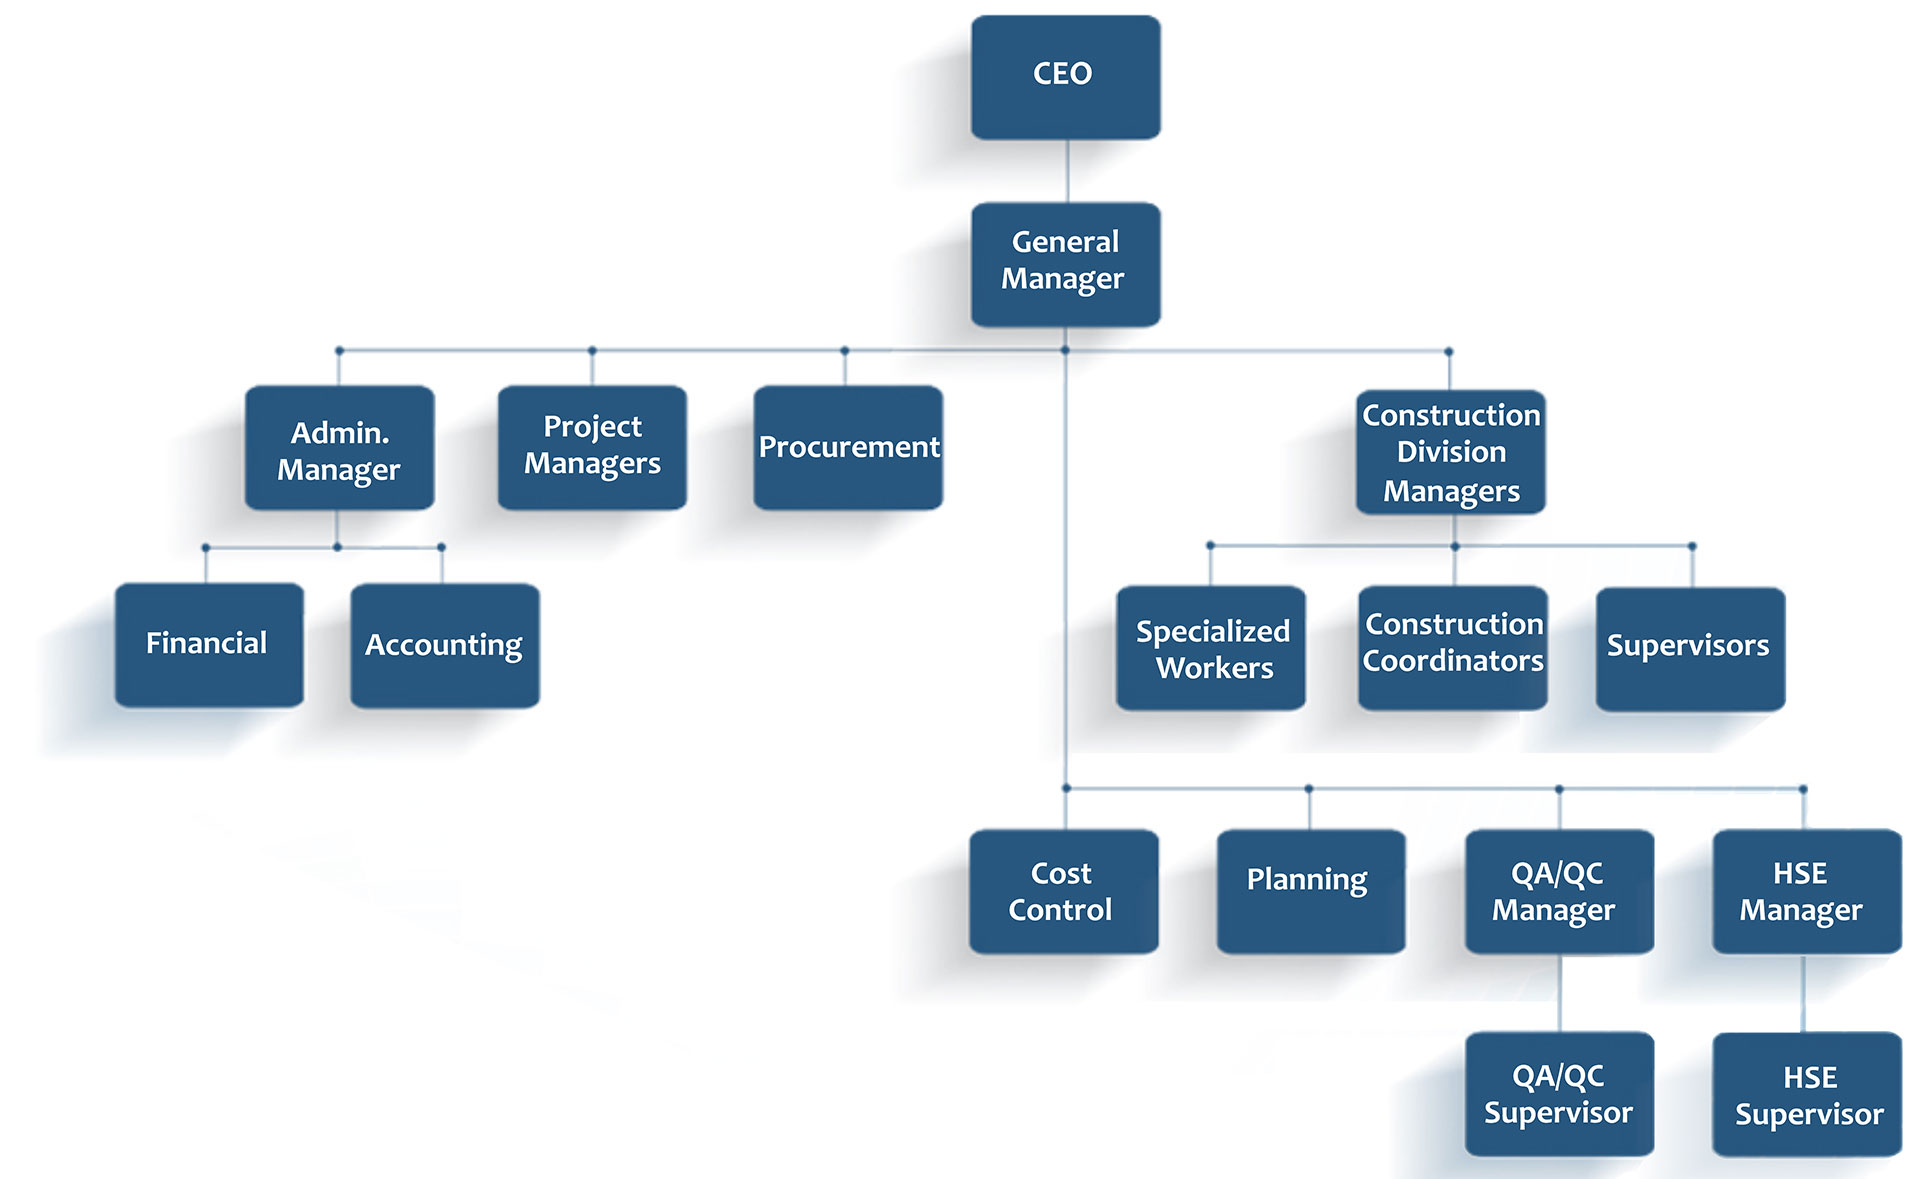 Roofing Company Organizational Chart